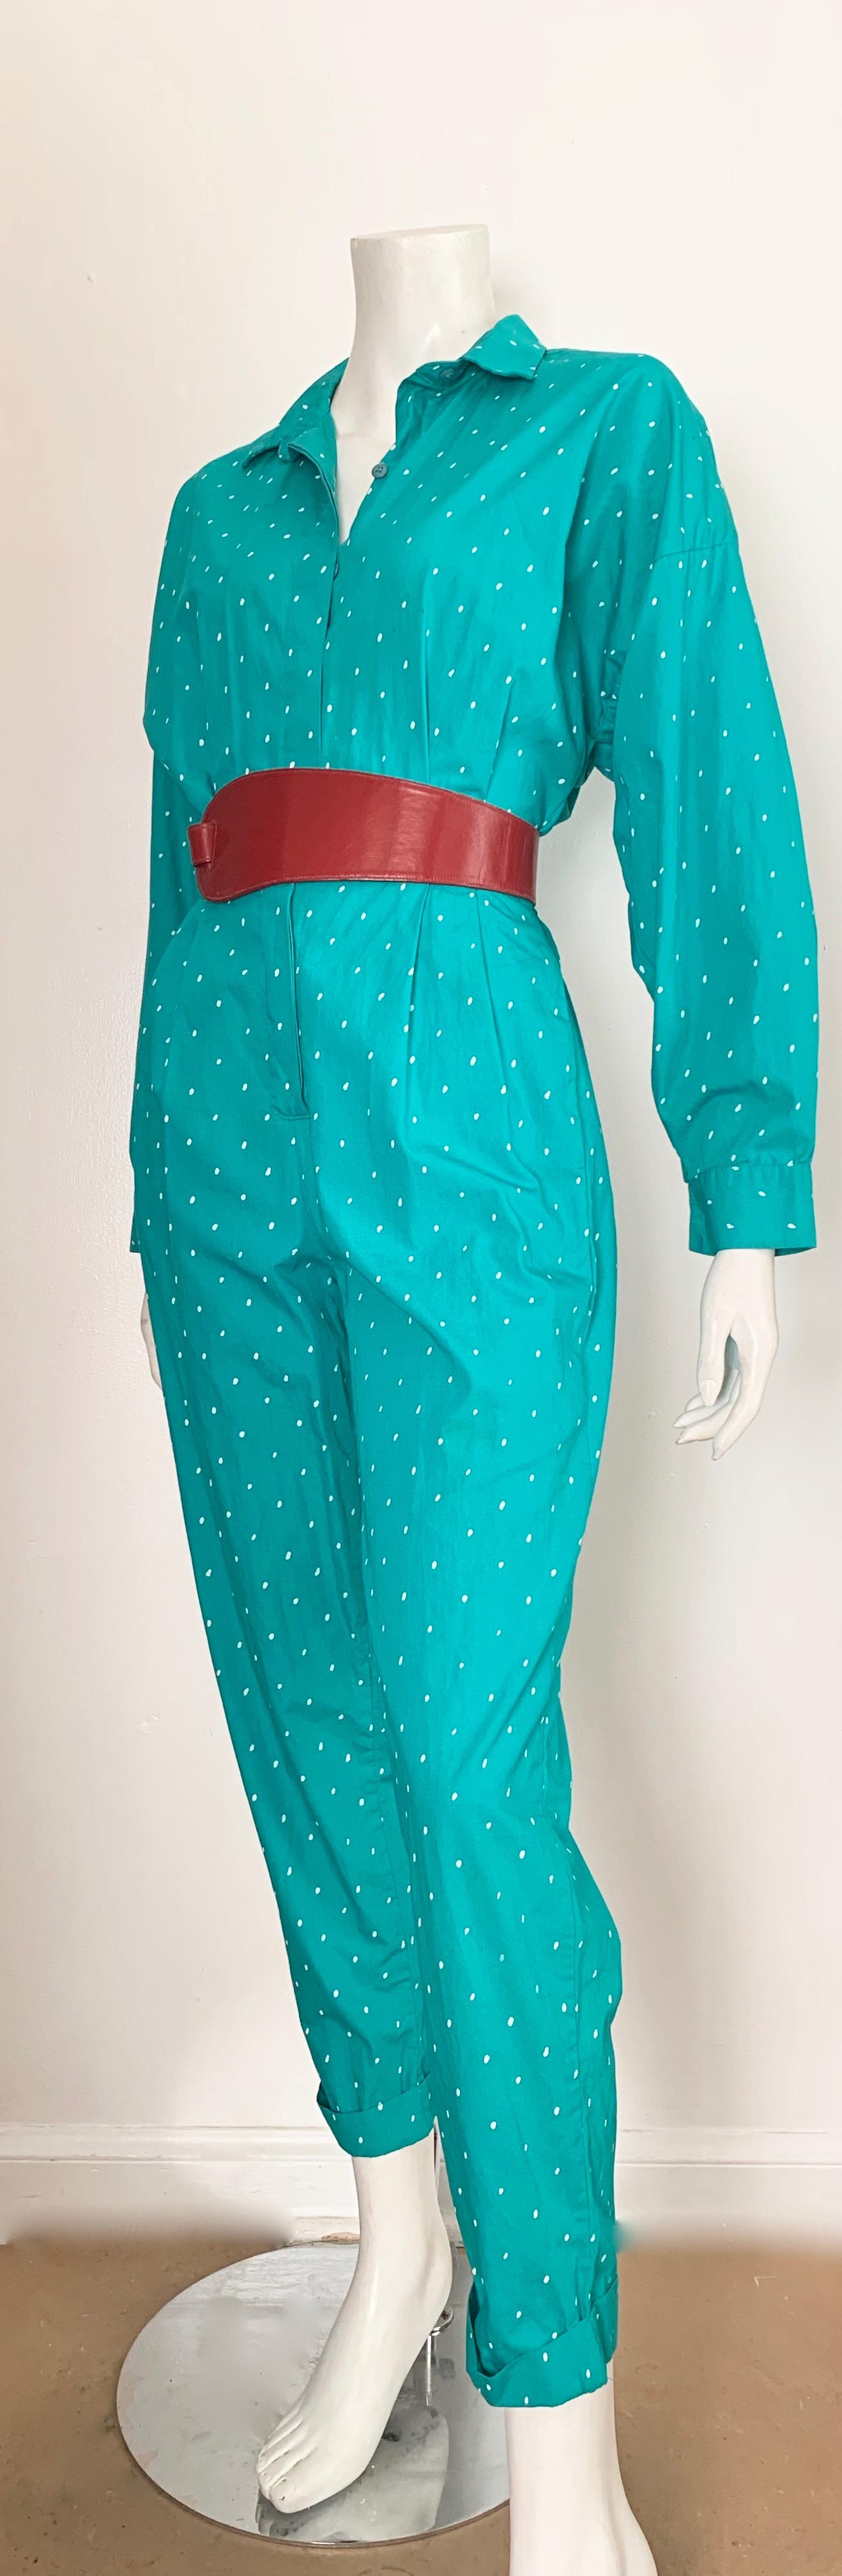 Saint Germain 1980s Cotton Polka Dot Jumpsuit with Pockets Size 4.  9